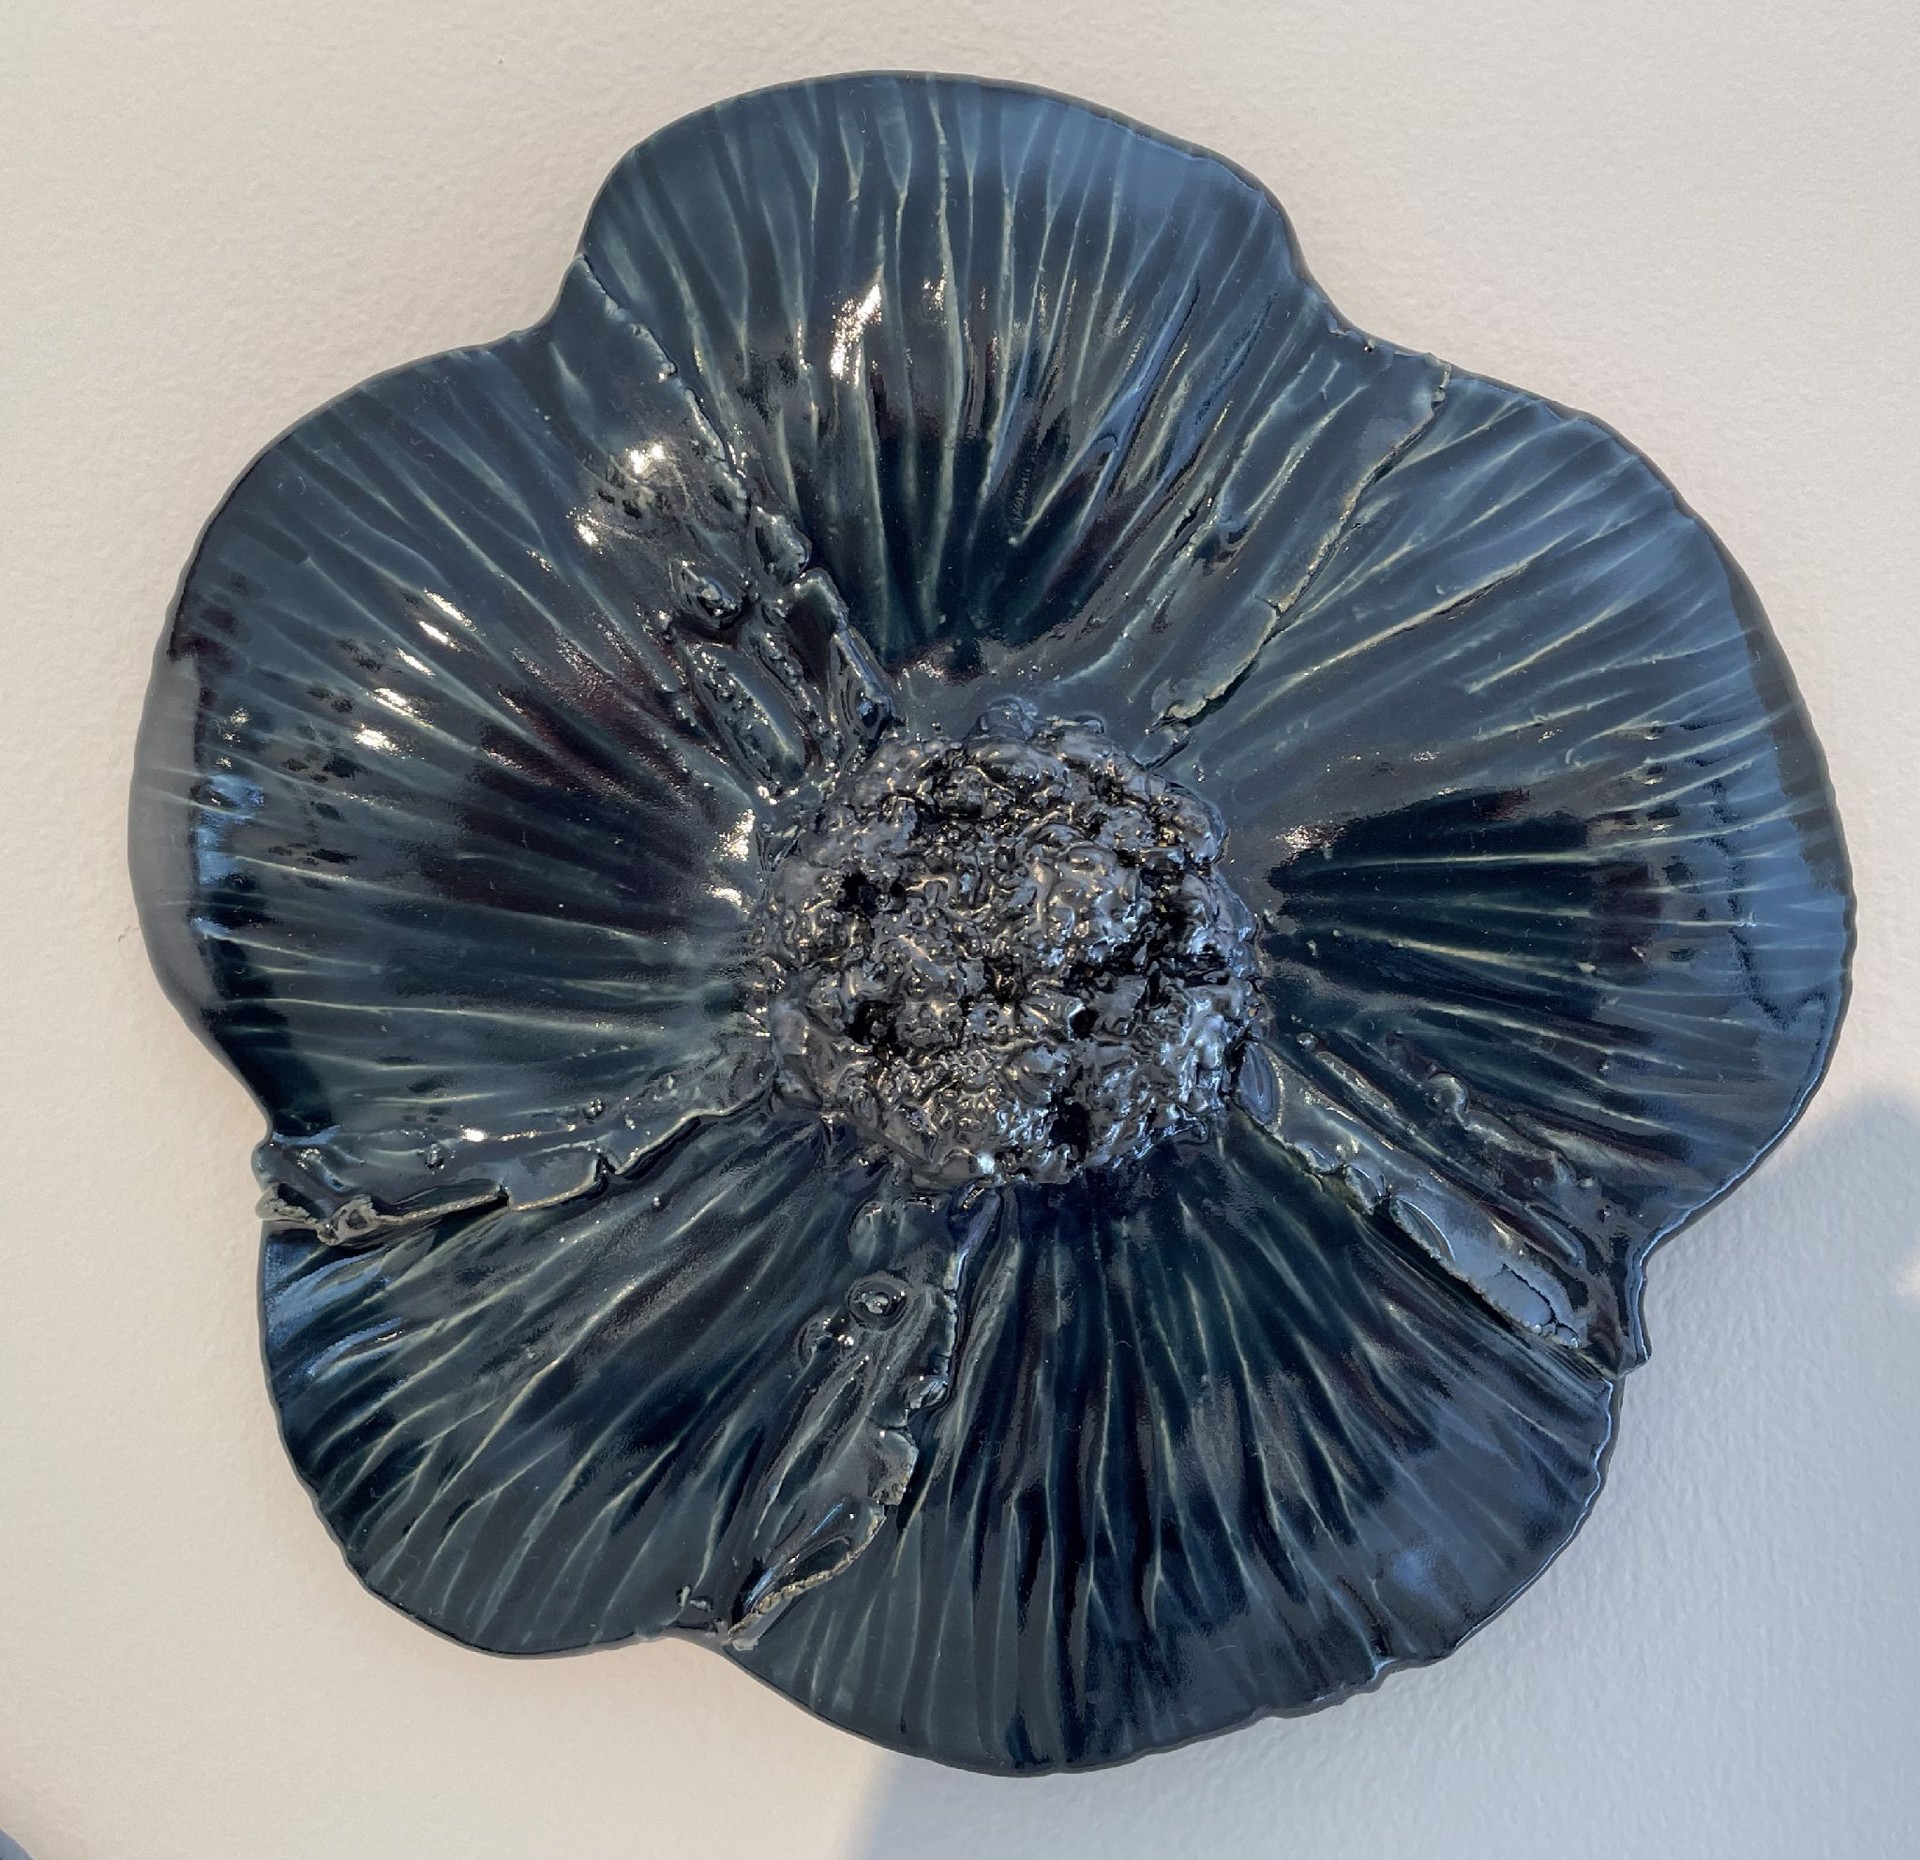 Flower Blue/Metallic 6"" by Jill Rothenberg-Simmons